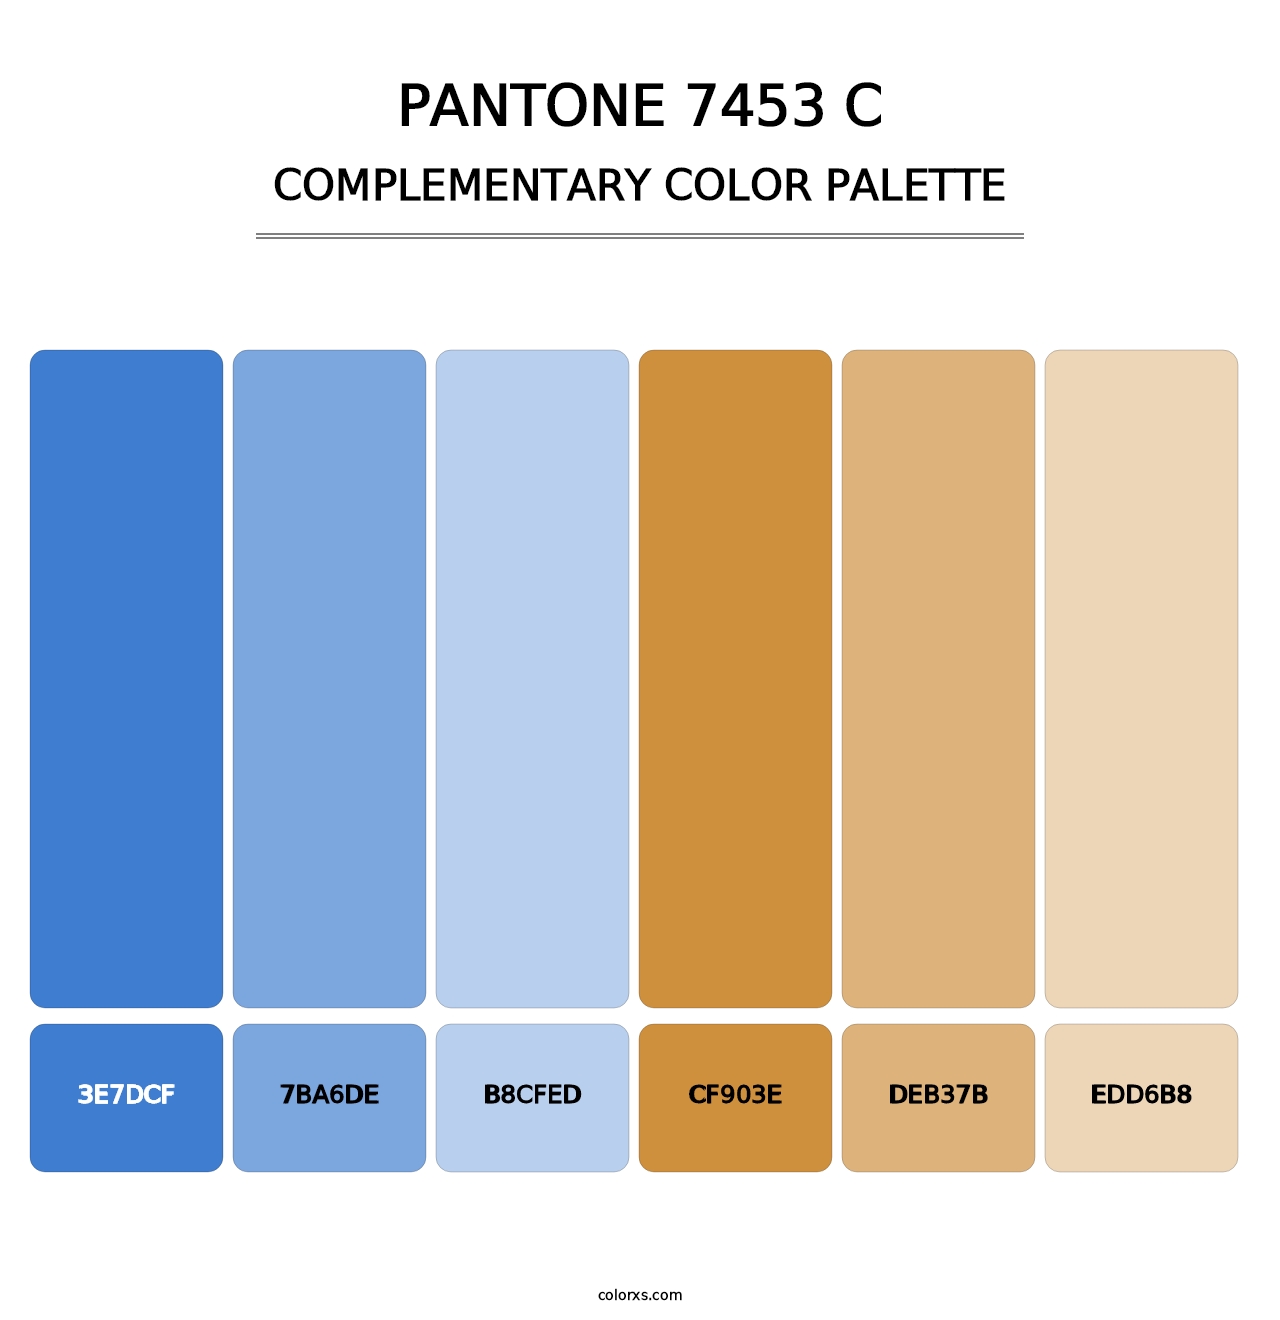 PANTONE 7453 C - Complementary Color Palette